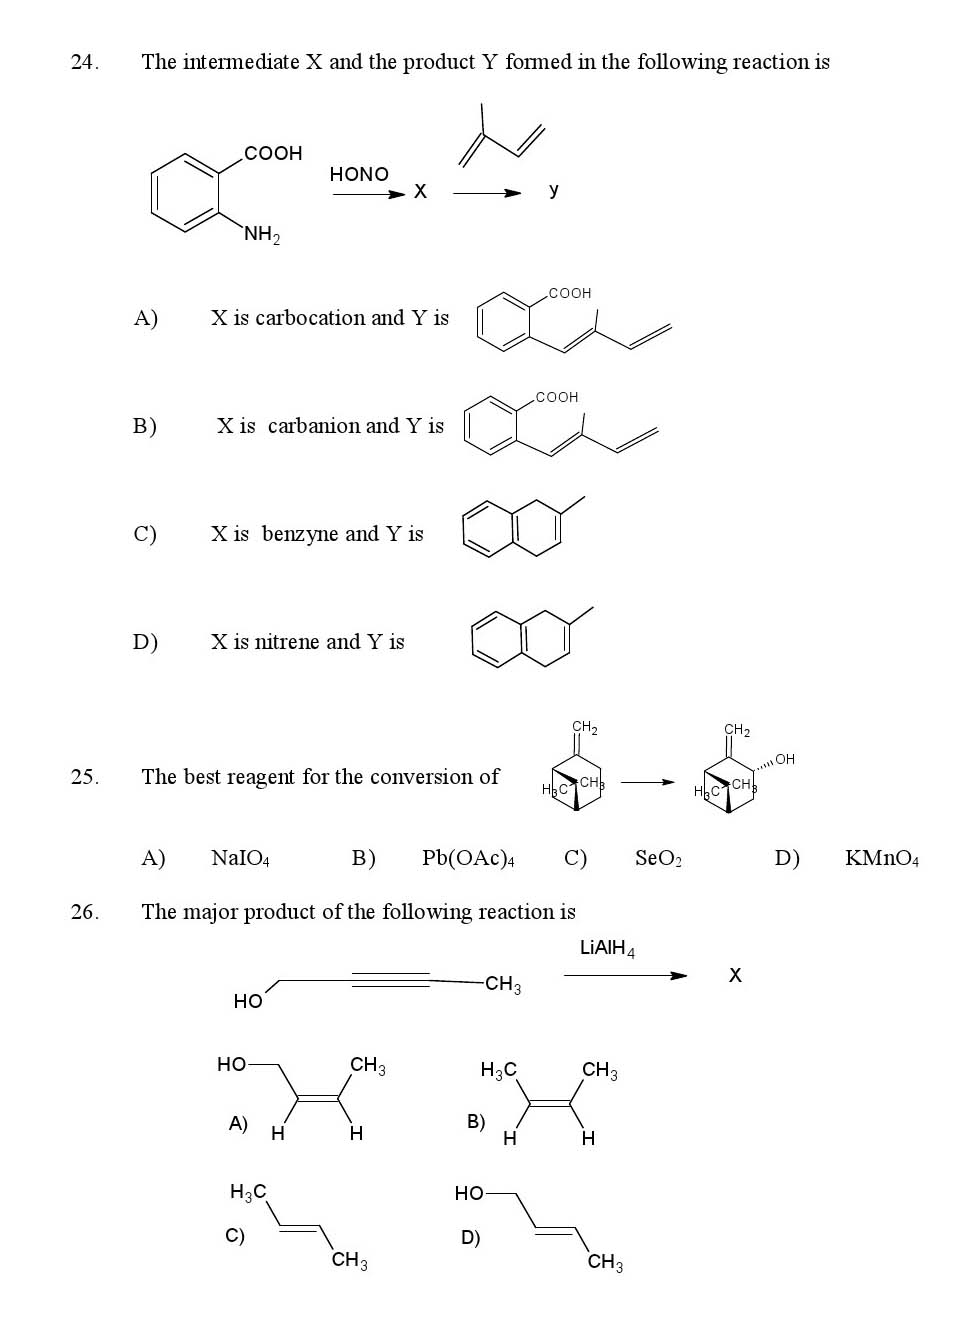 Kerala SET Chemistry Exam 2016 Question Code 16604 A 4